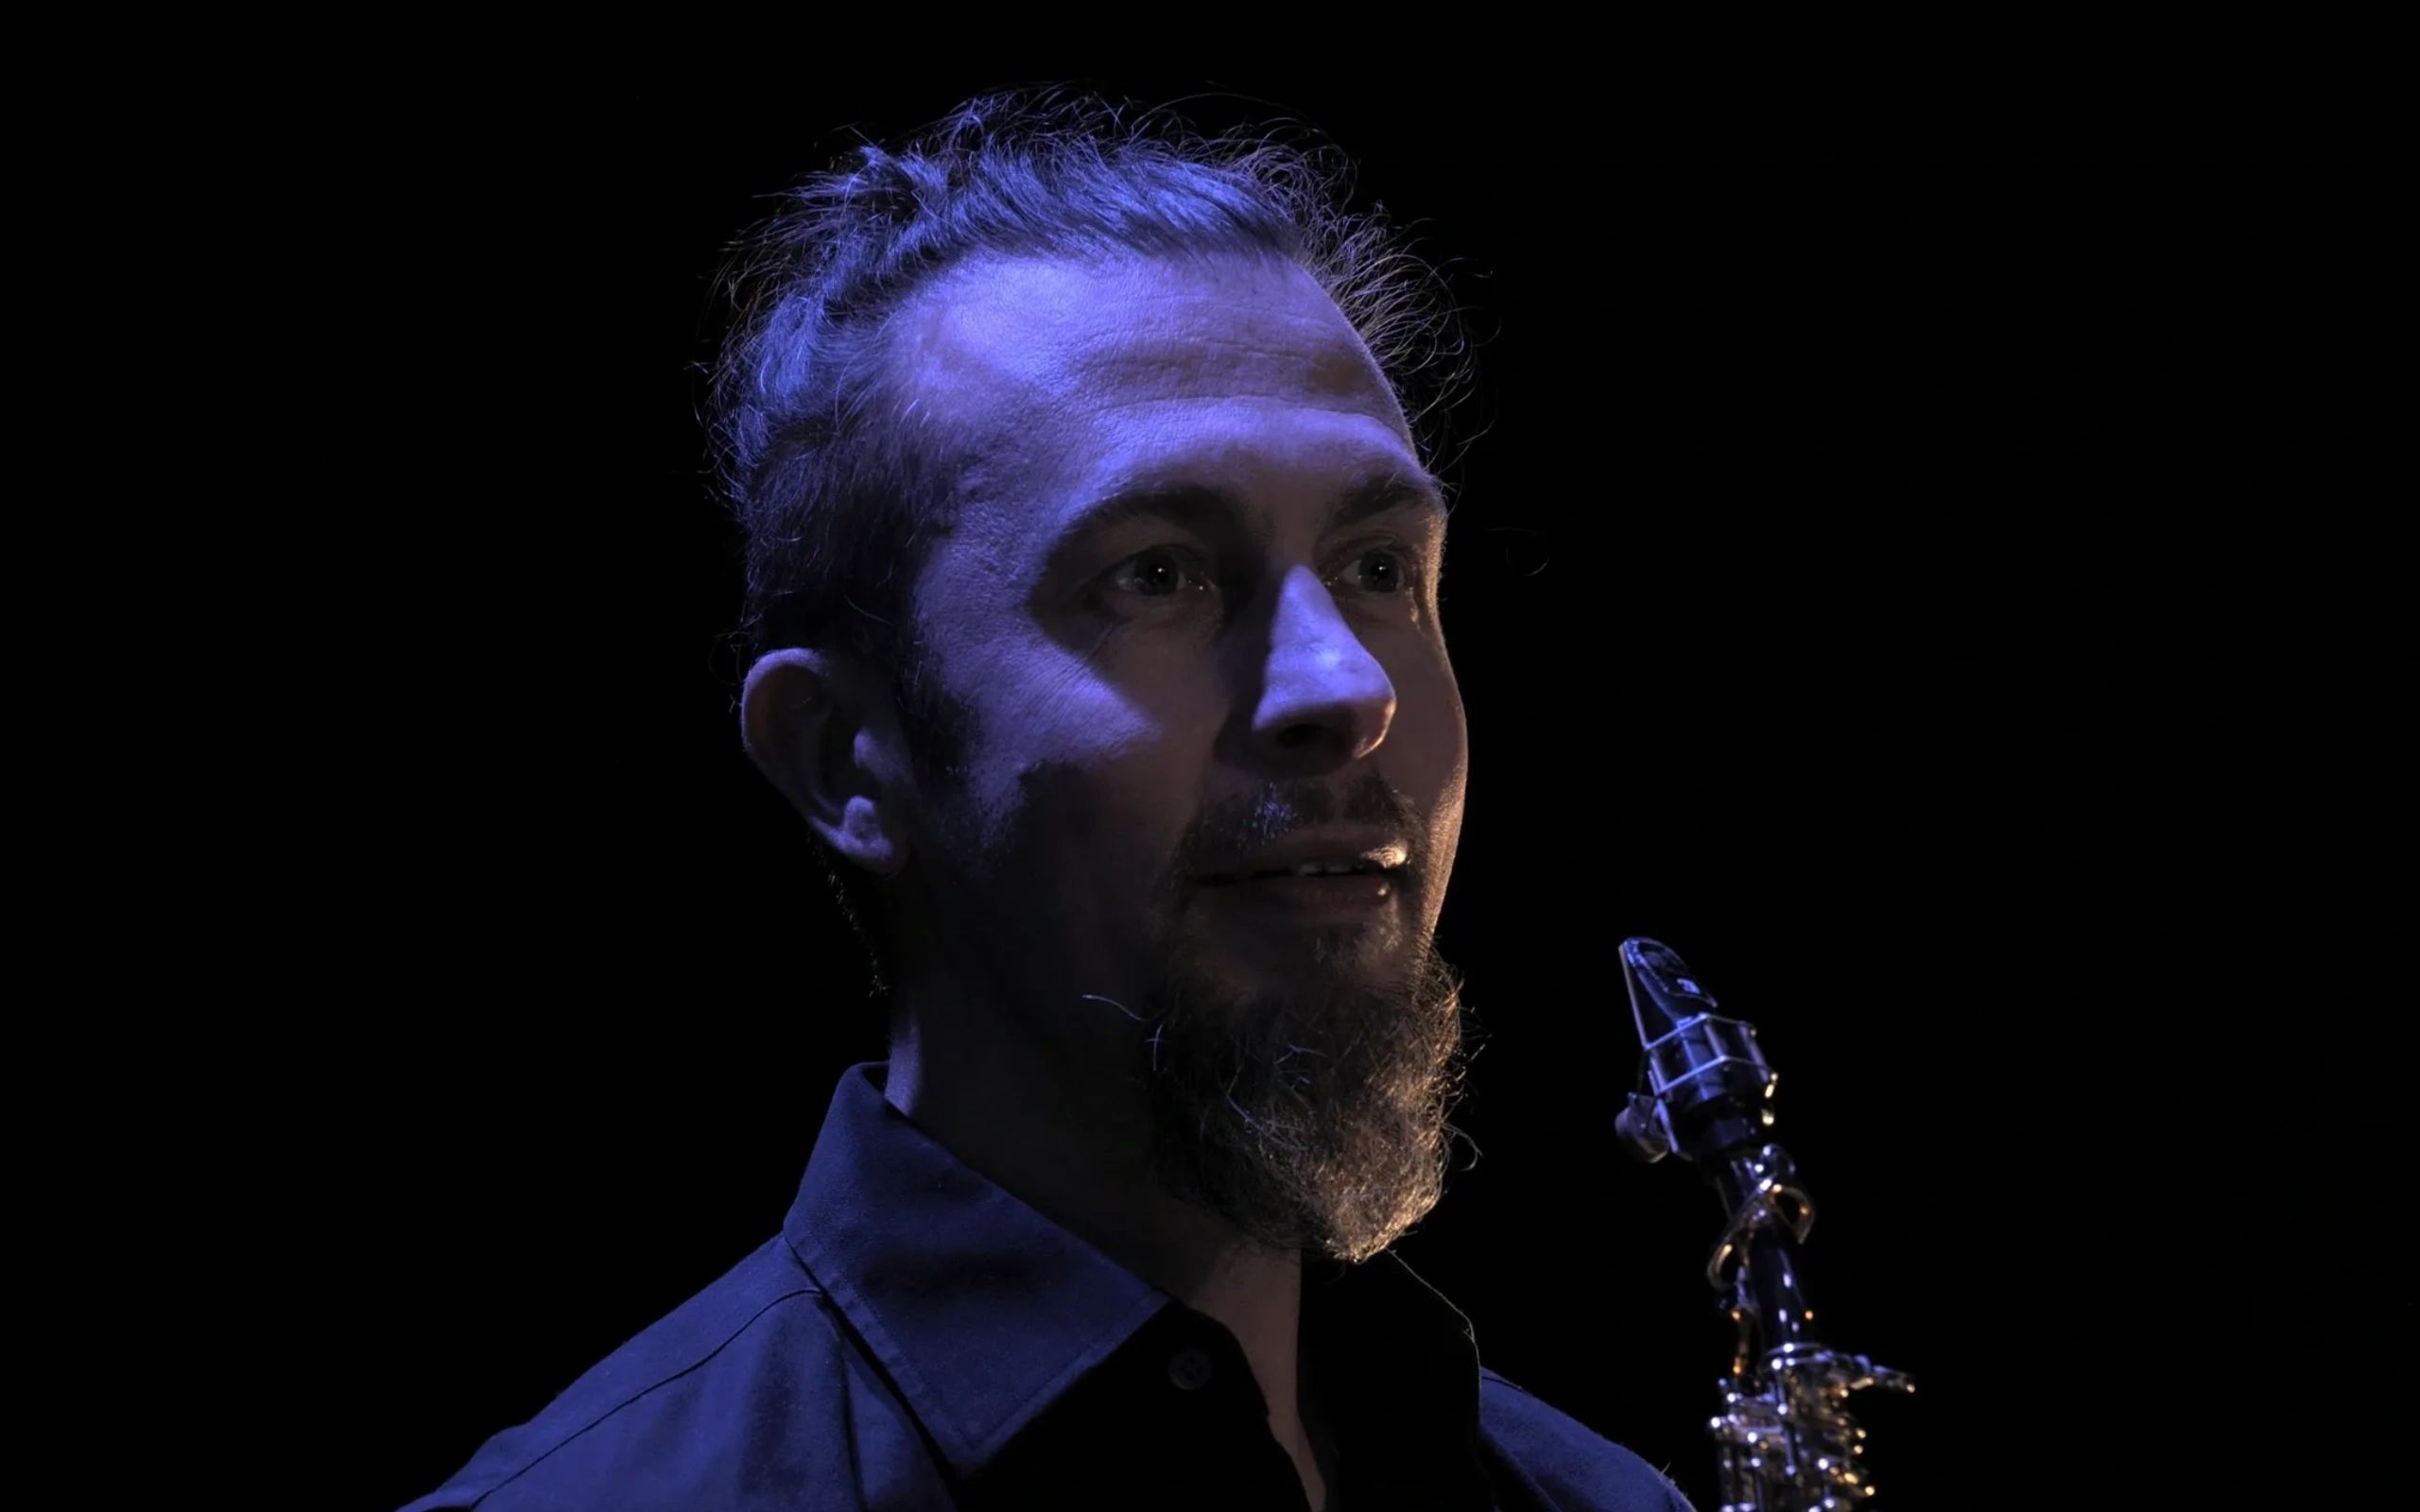 Richard Mercier saxophoniste  
Photo Jeanne Degois